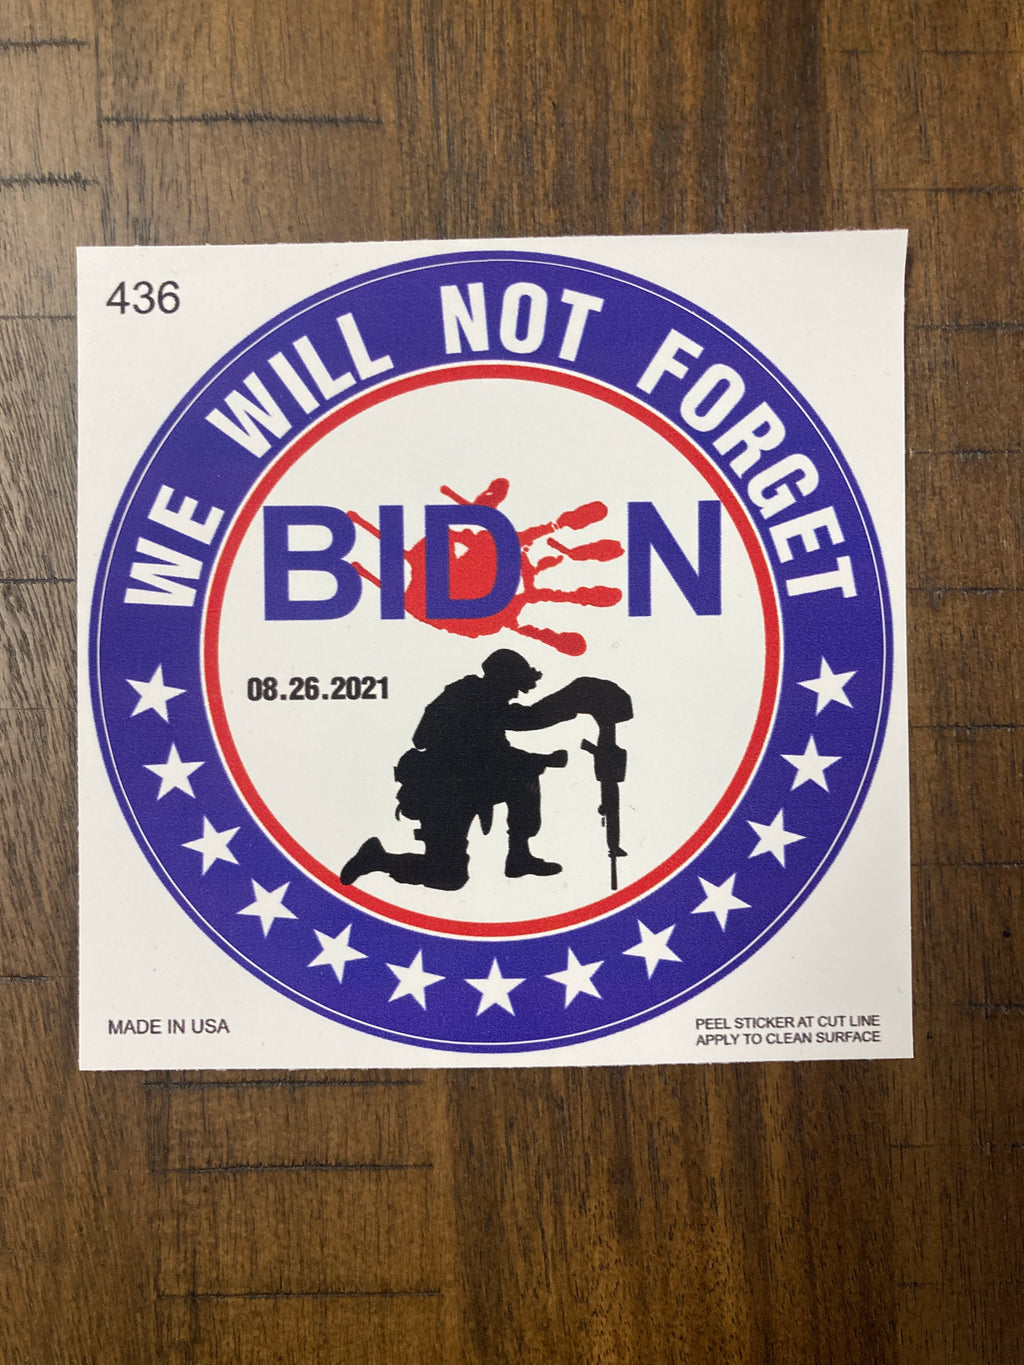 "We Will Not Forget" Bumper Sticker